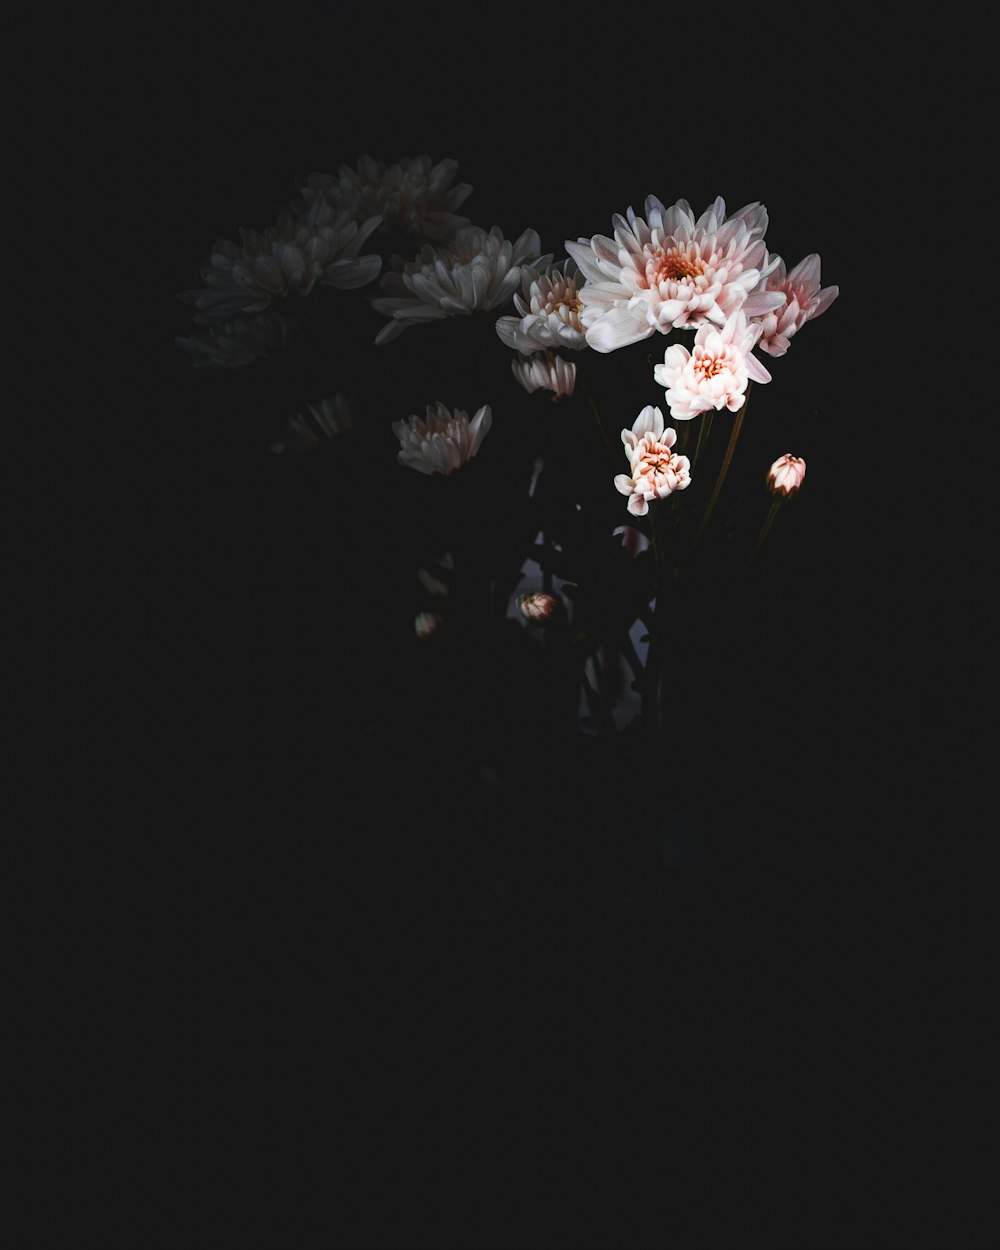 fiore dai petali bianchi